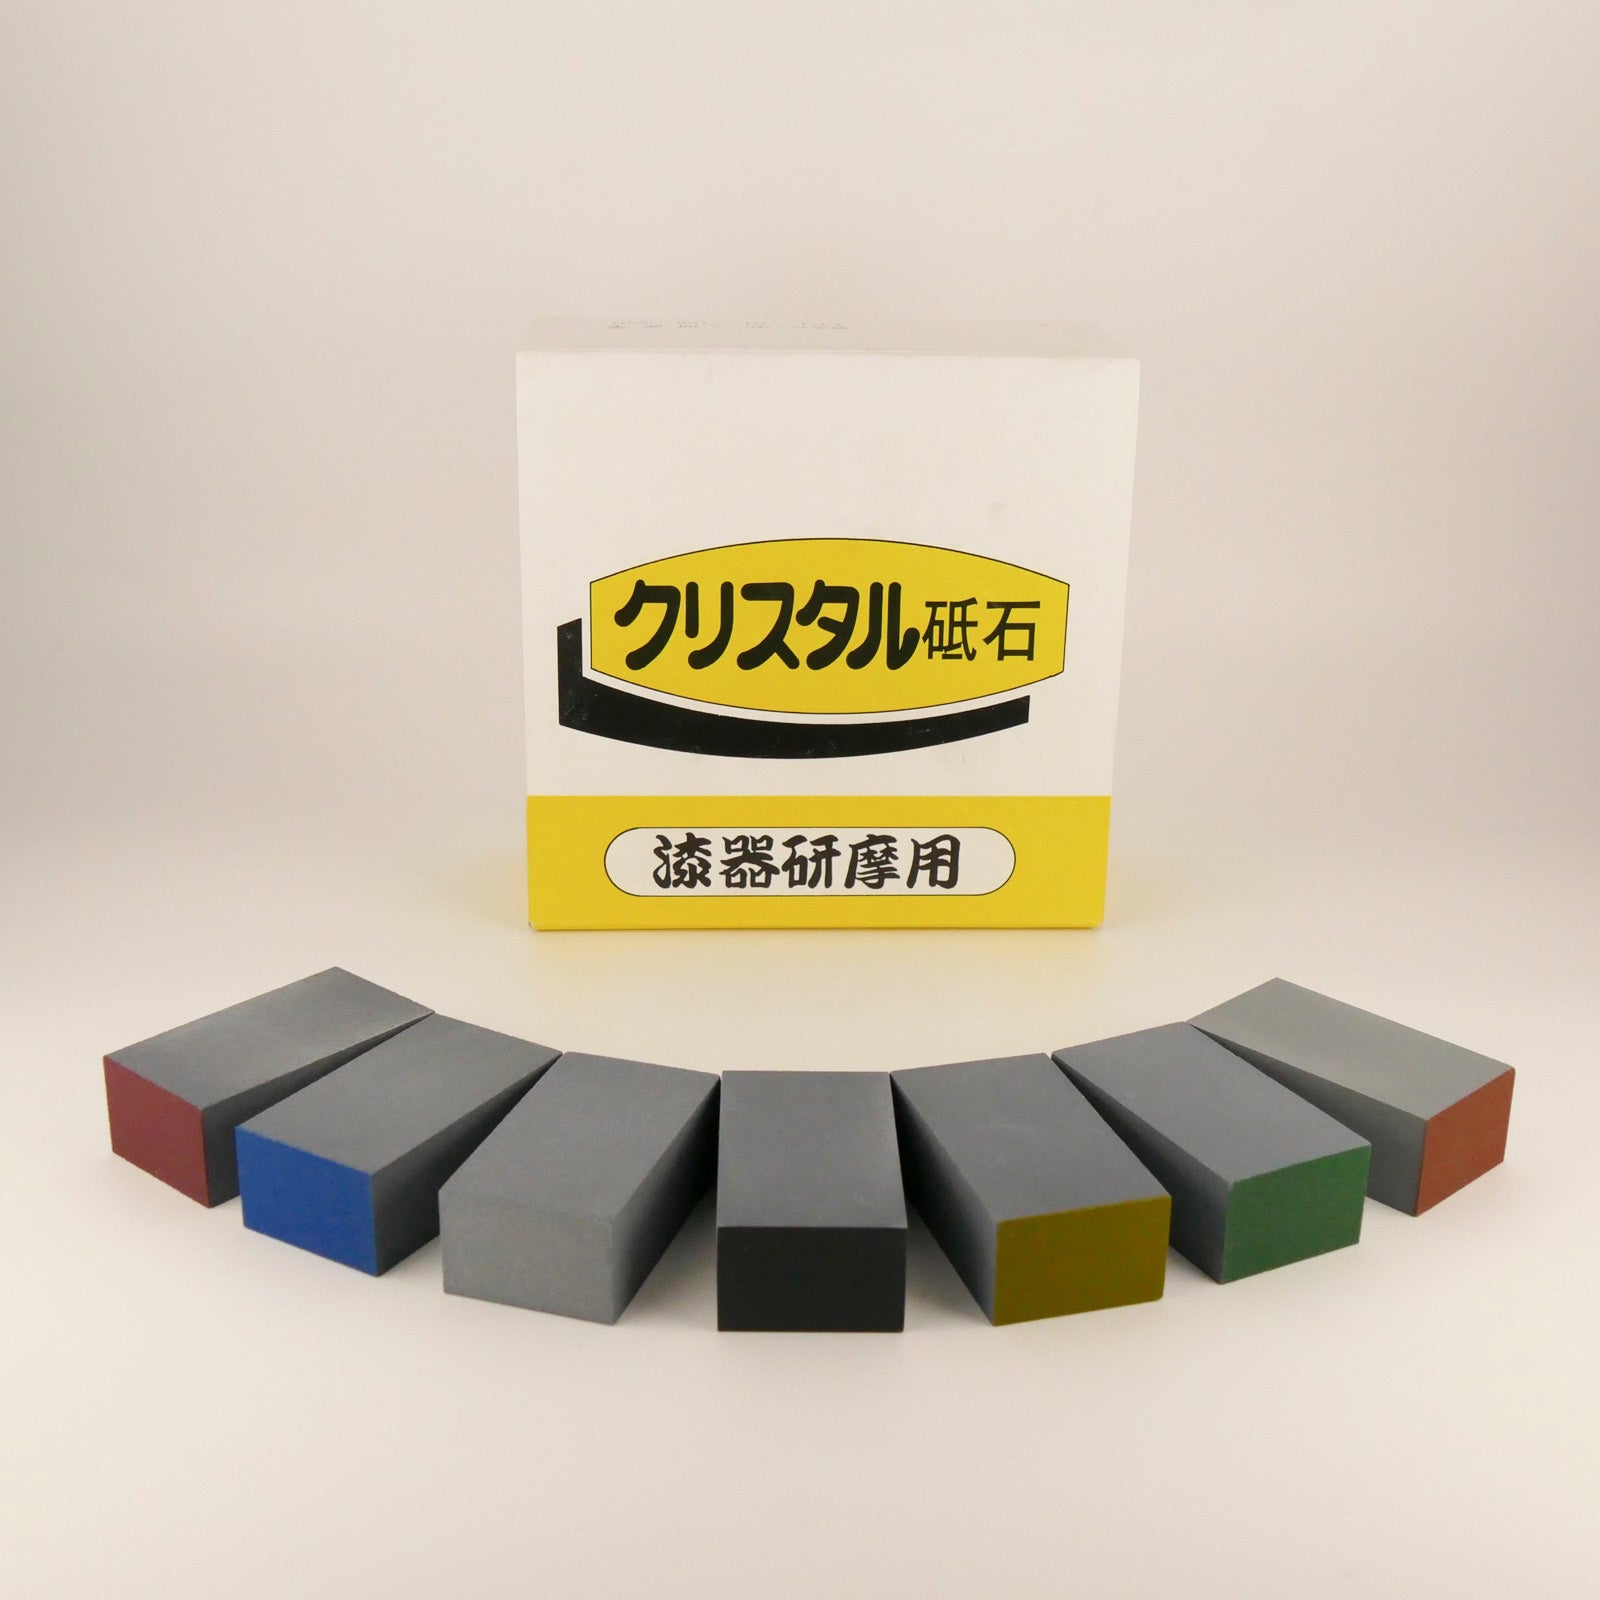 Crystal grindstone M-3, each sold separately/クリスタル砥石Mー３(バラ売り)